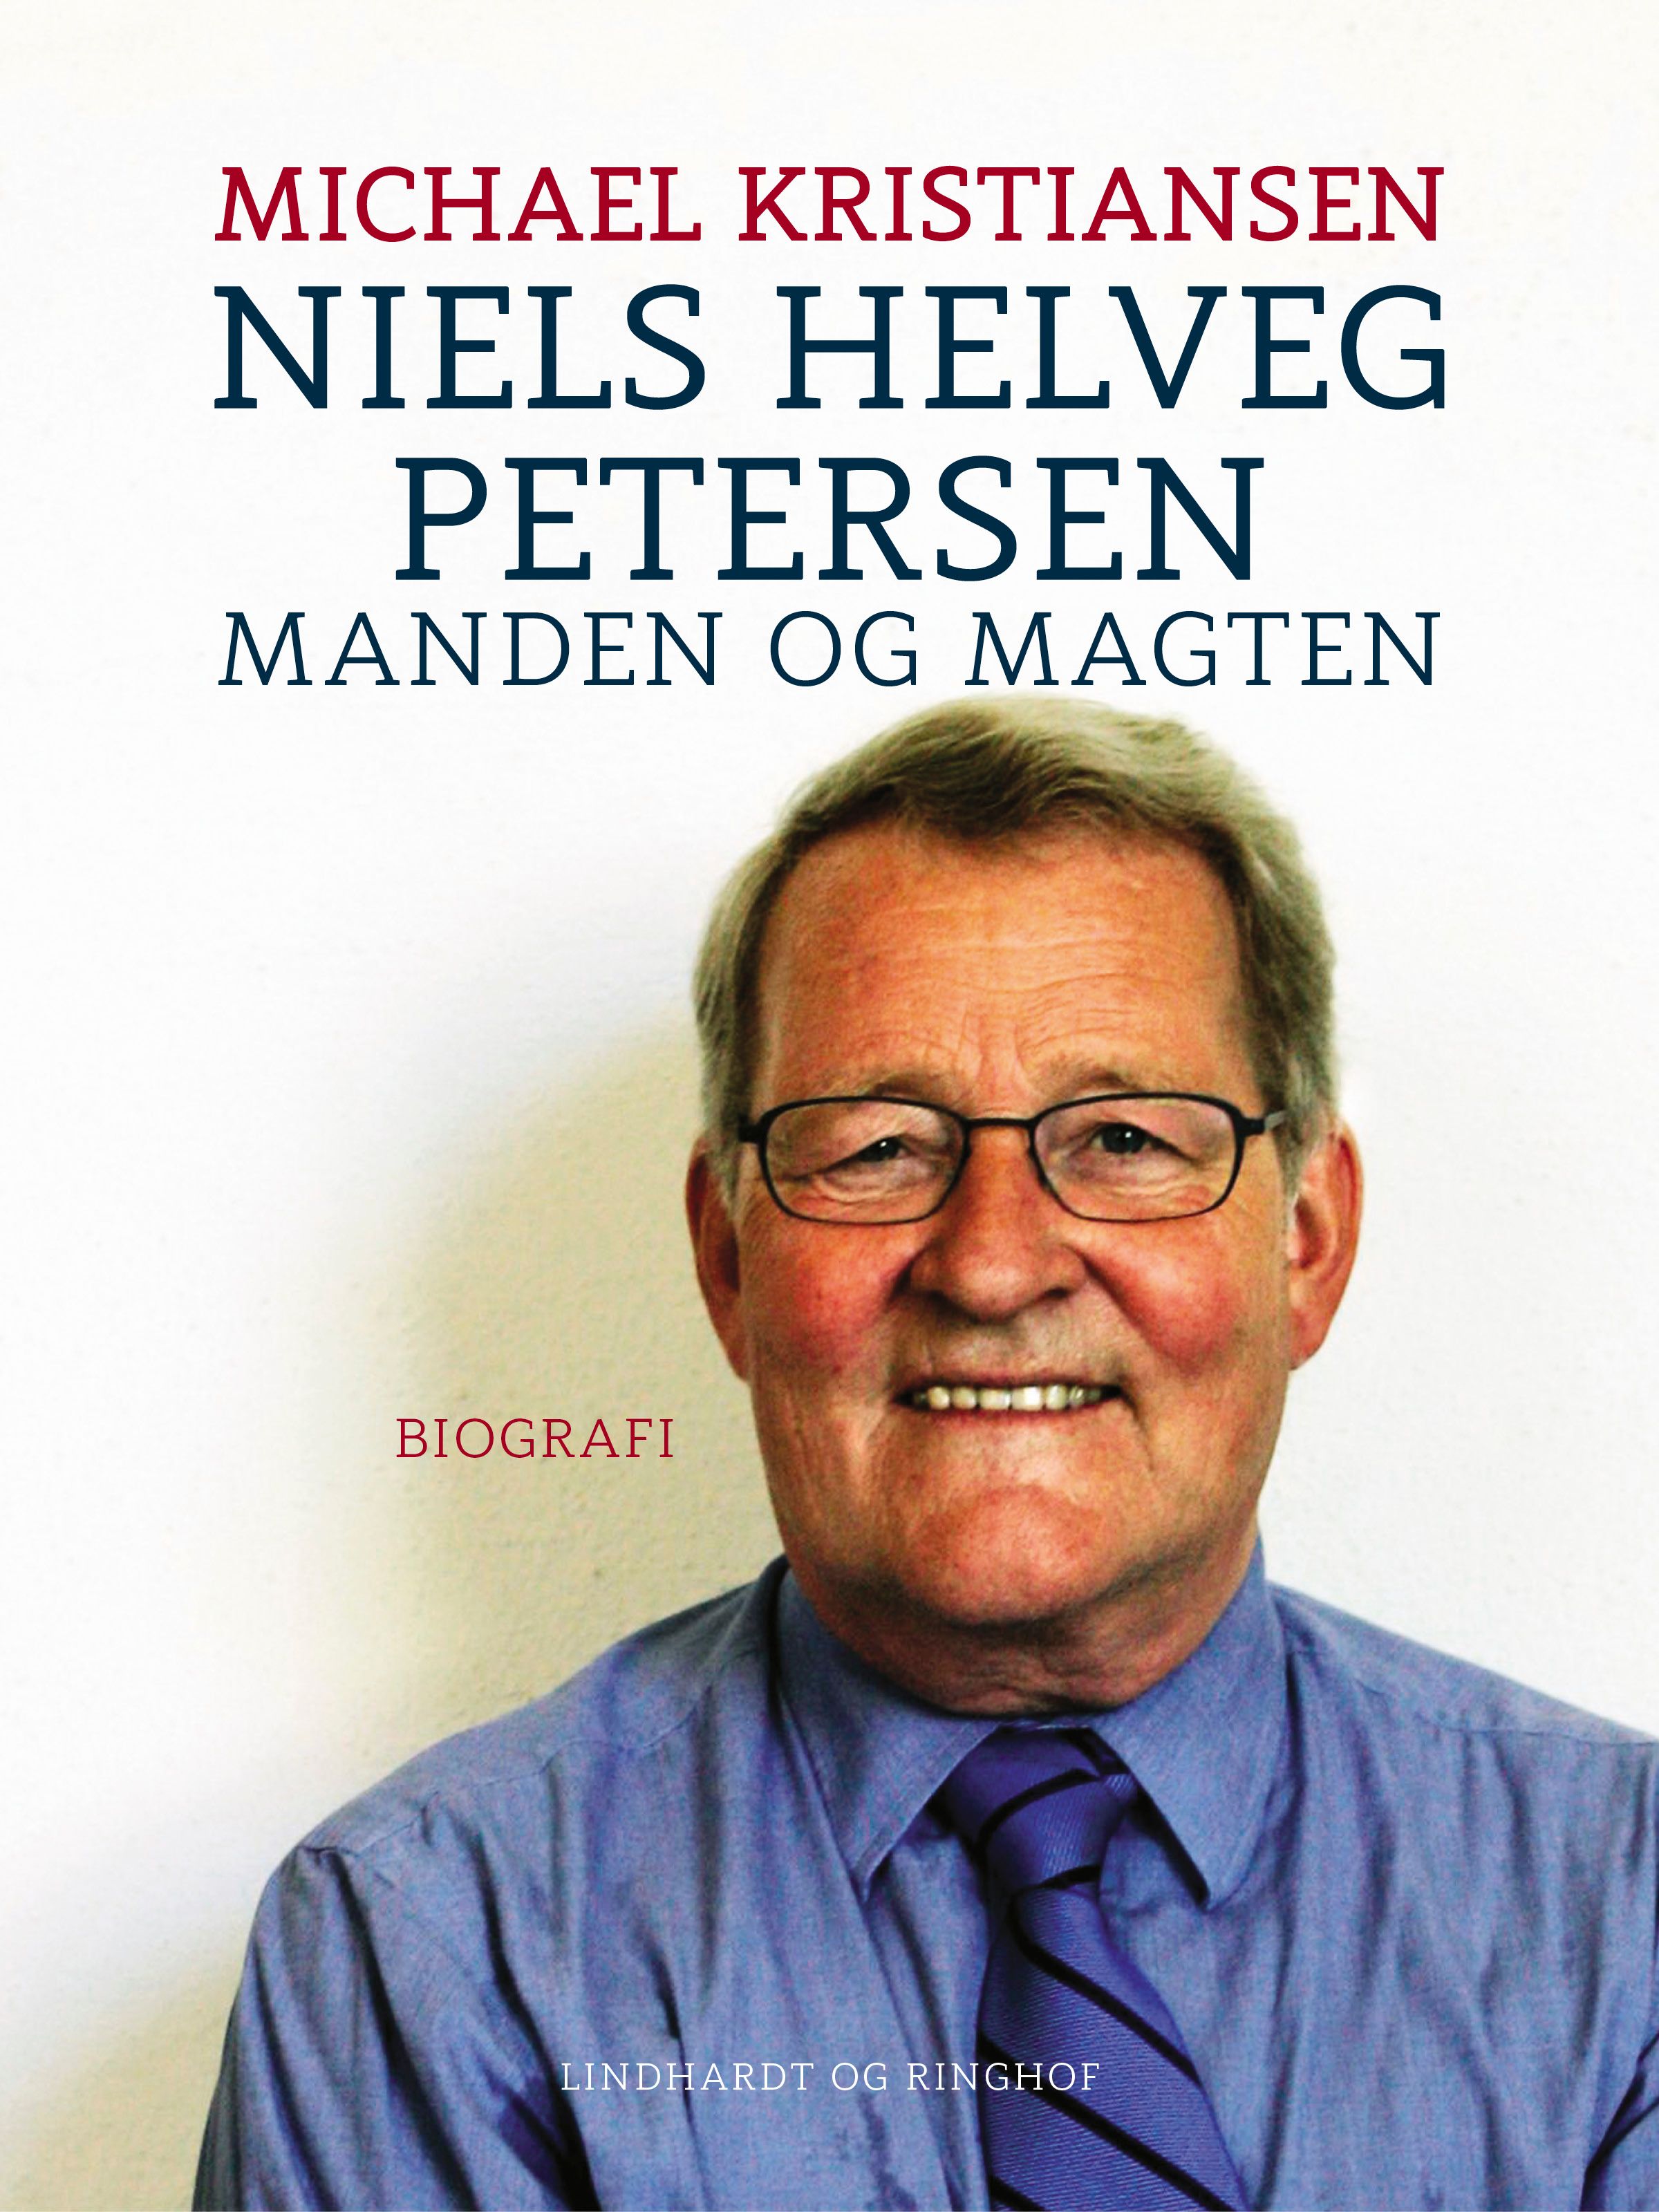 Niels Helveg Petersen. Manden og magten, e-bog af Michael Kristiansen